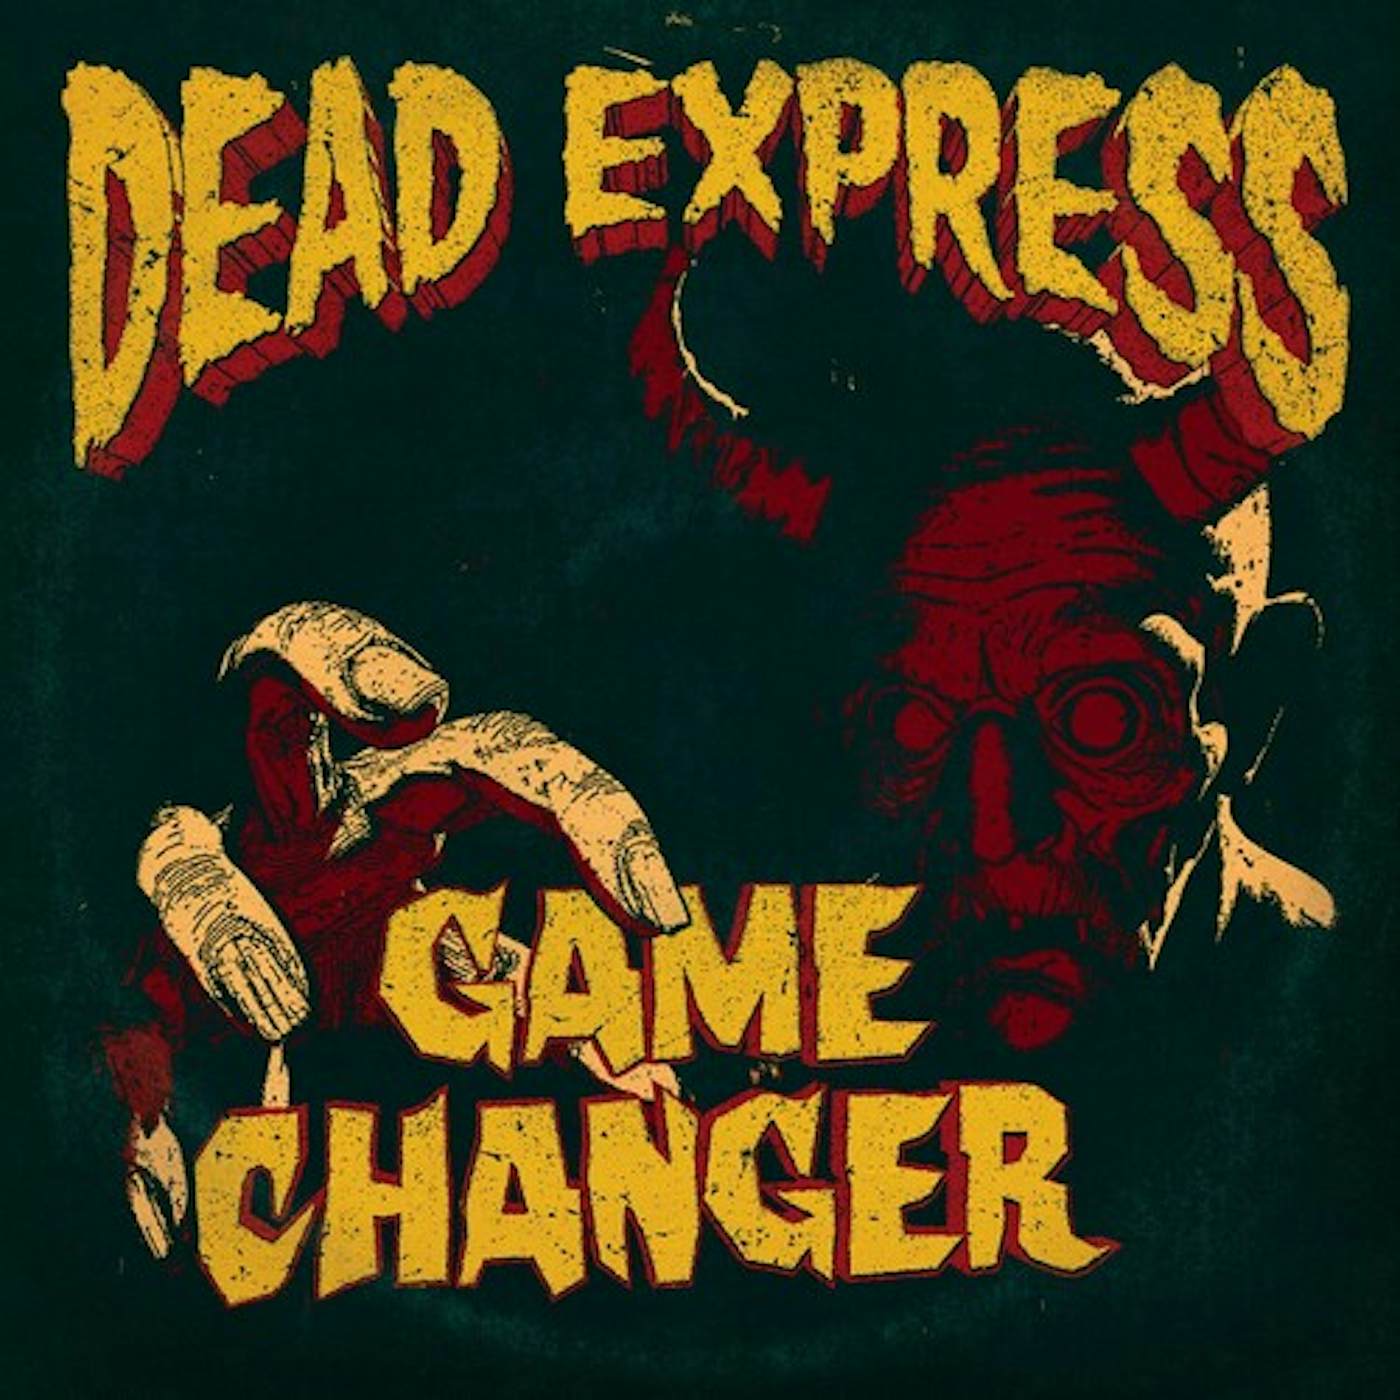 Dead Express Game Changer Vinyl Record